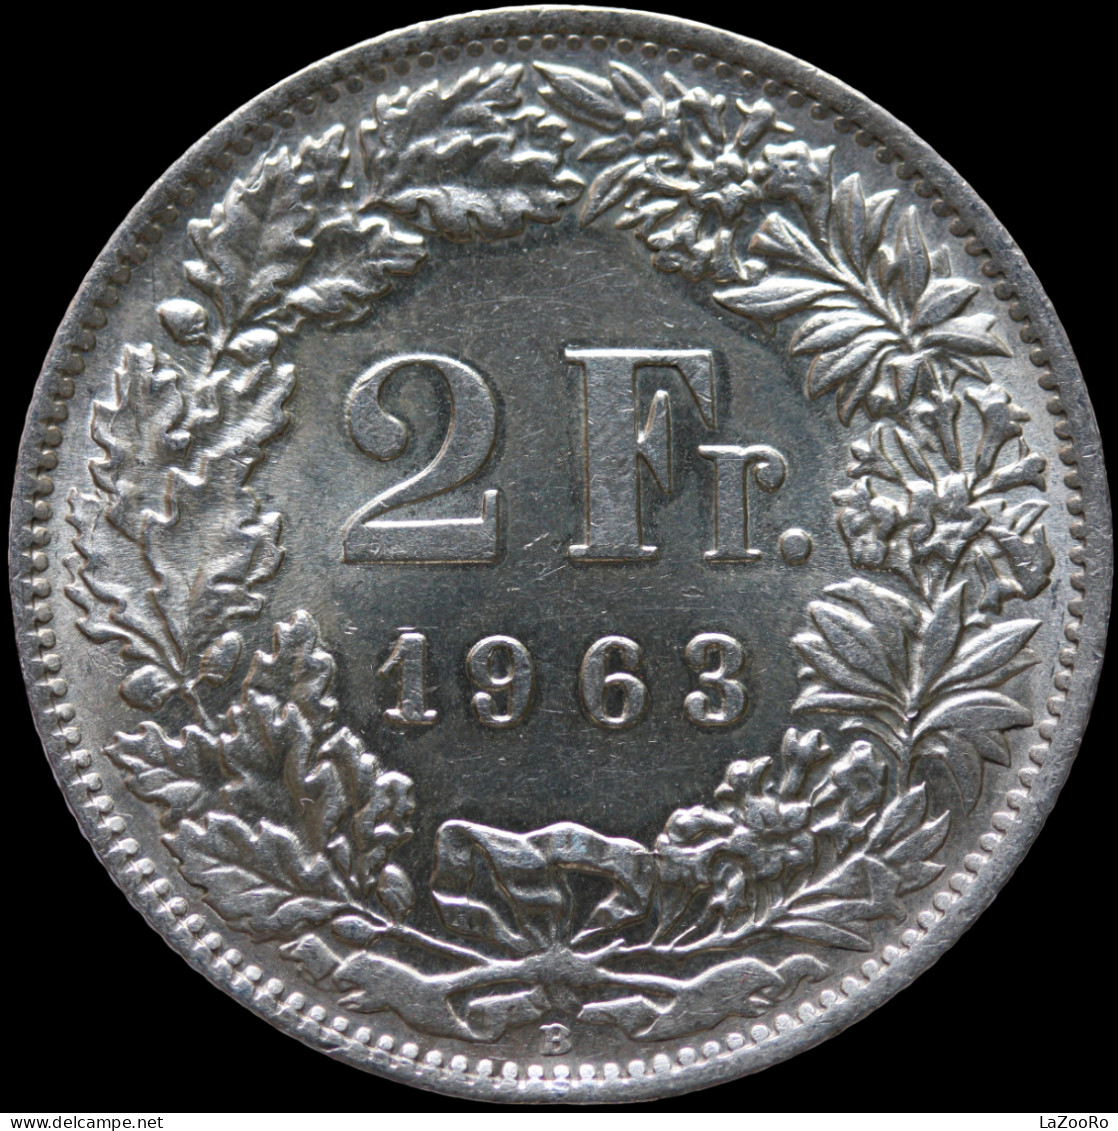 LaZooRo: Switzerland 2 Francs 1963 UNC - Silver - 2 Francs